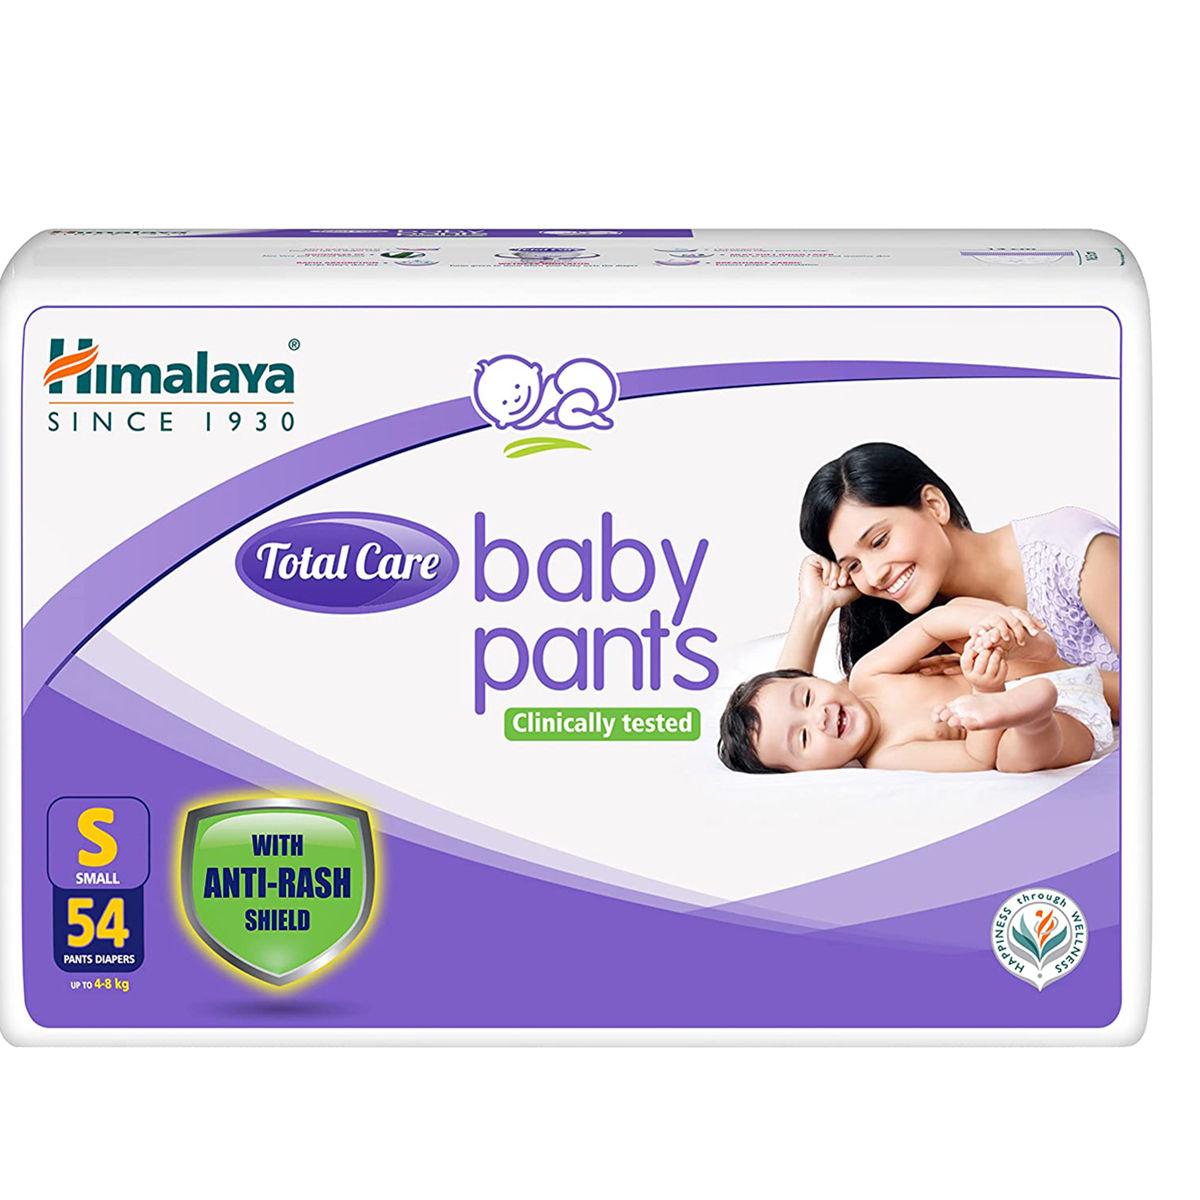 HIMALAYA Total Care Baby pants  M  Buy 54 HIMALAYA Pant Diapers for babies  weighing  11 Kg  Flipkartcom